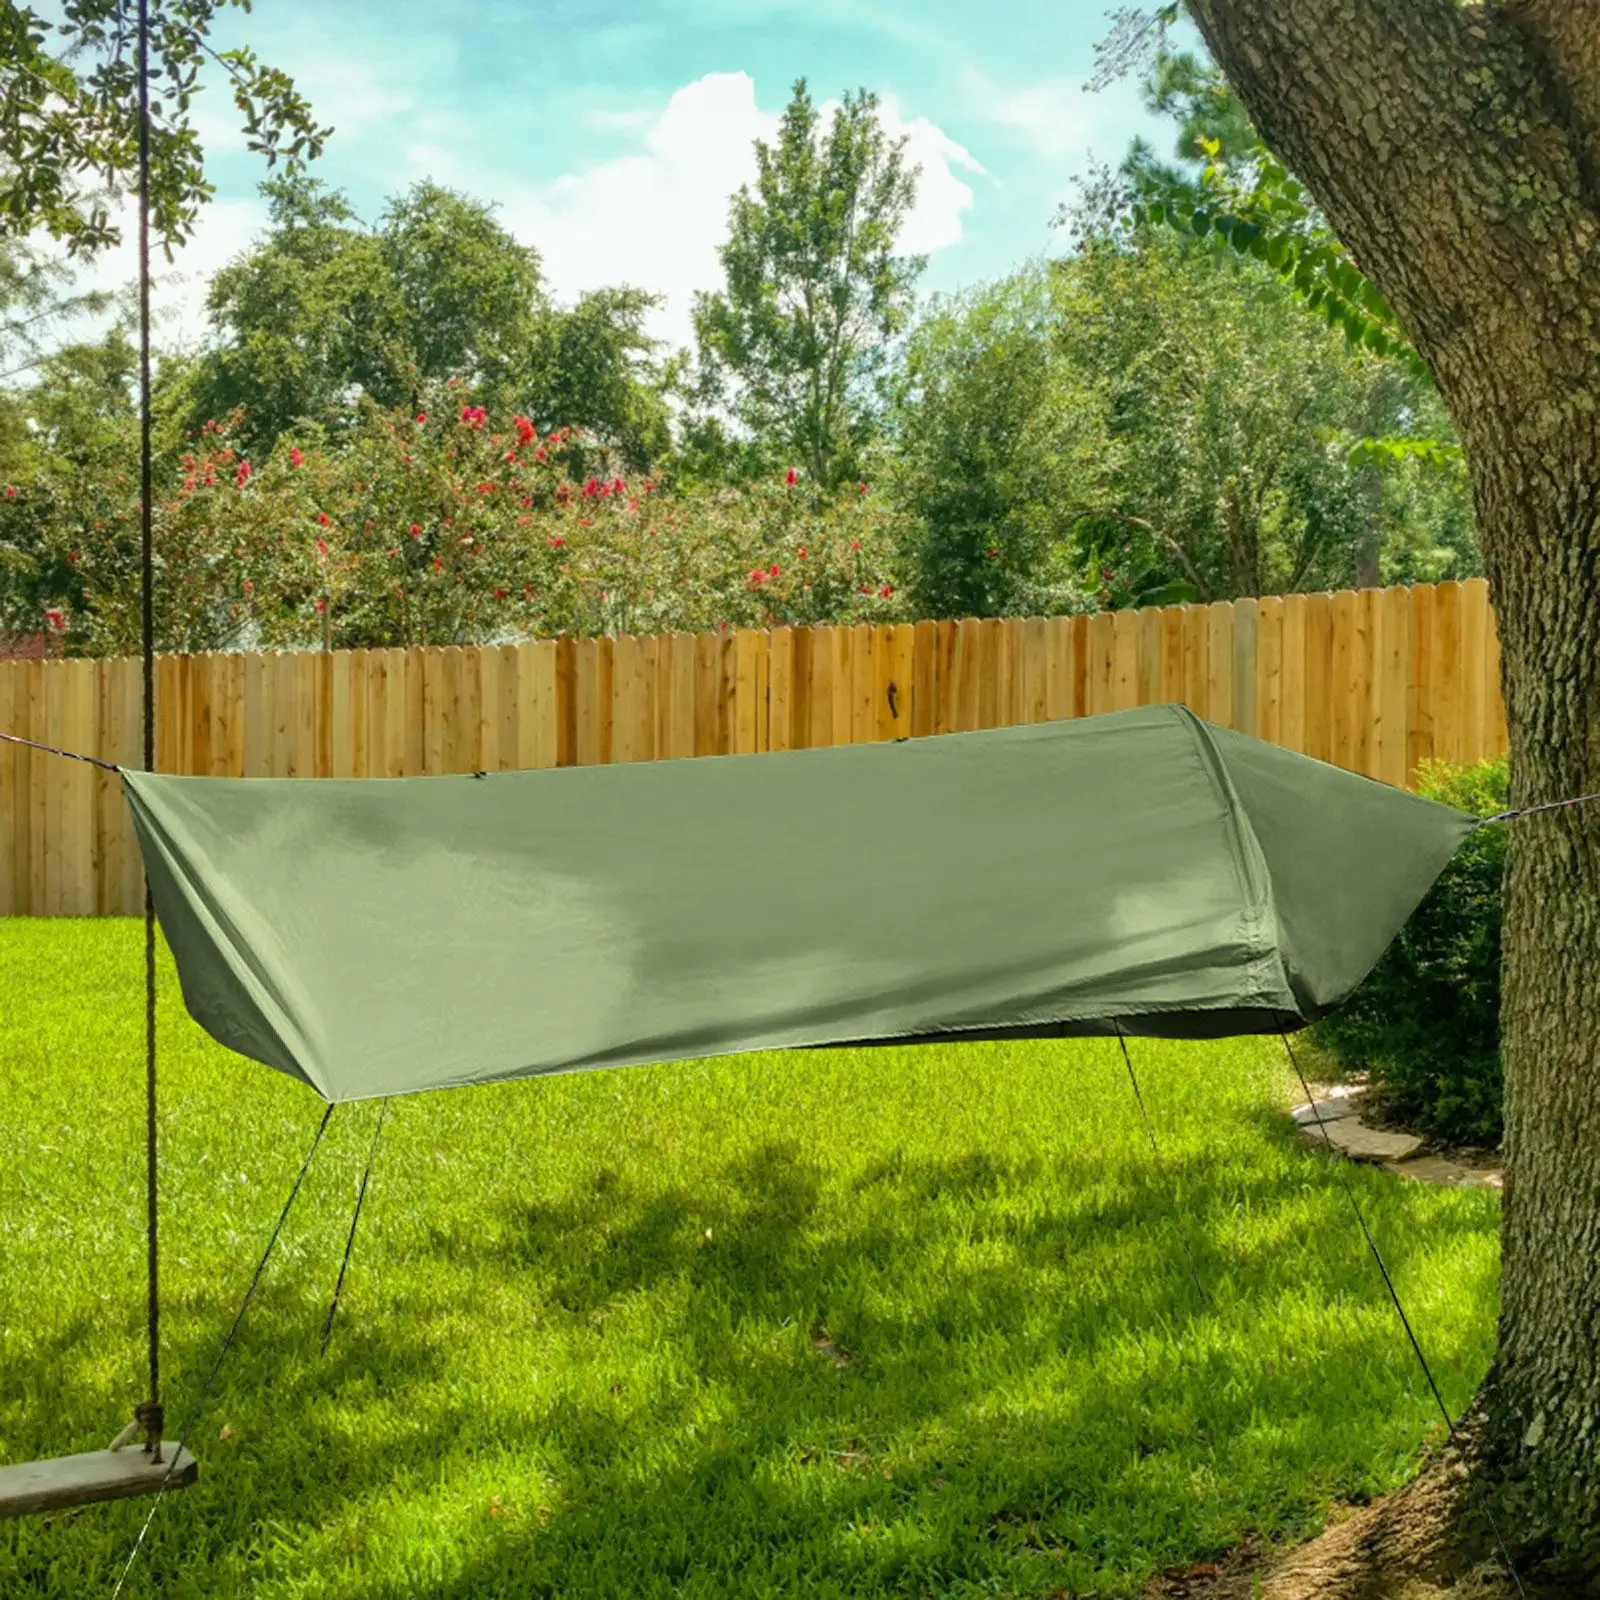 Portable Hammock Camping Hammock Fittings Lightweight Multipurpose Sleeping Bag Net Cover for Backyard Backpacking Hiking Beach